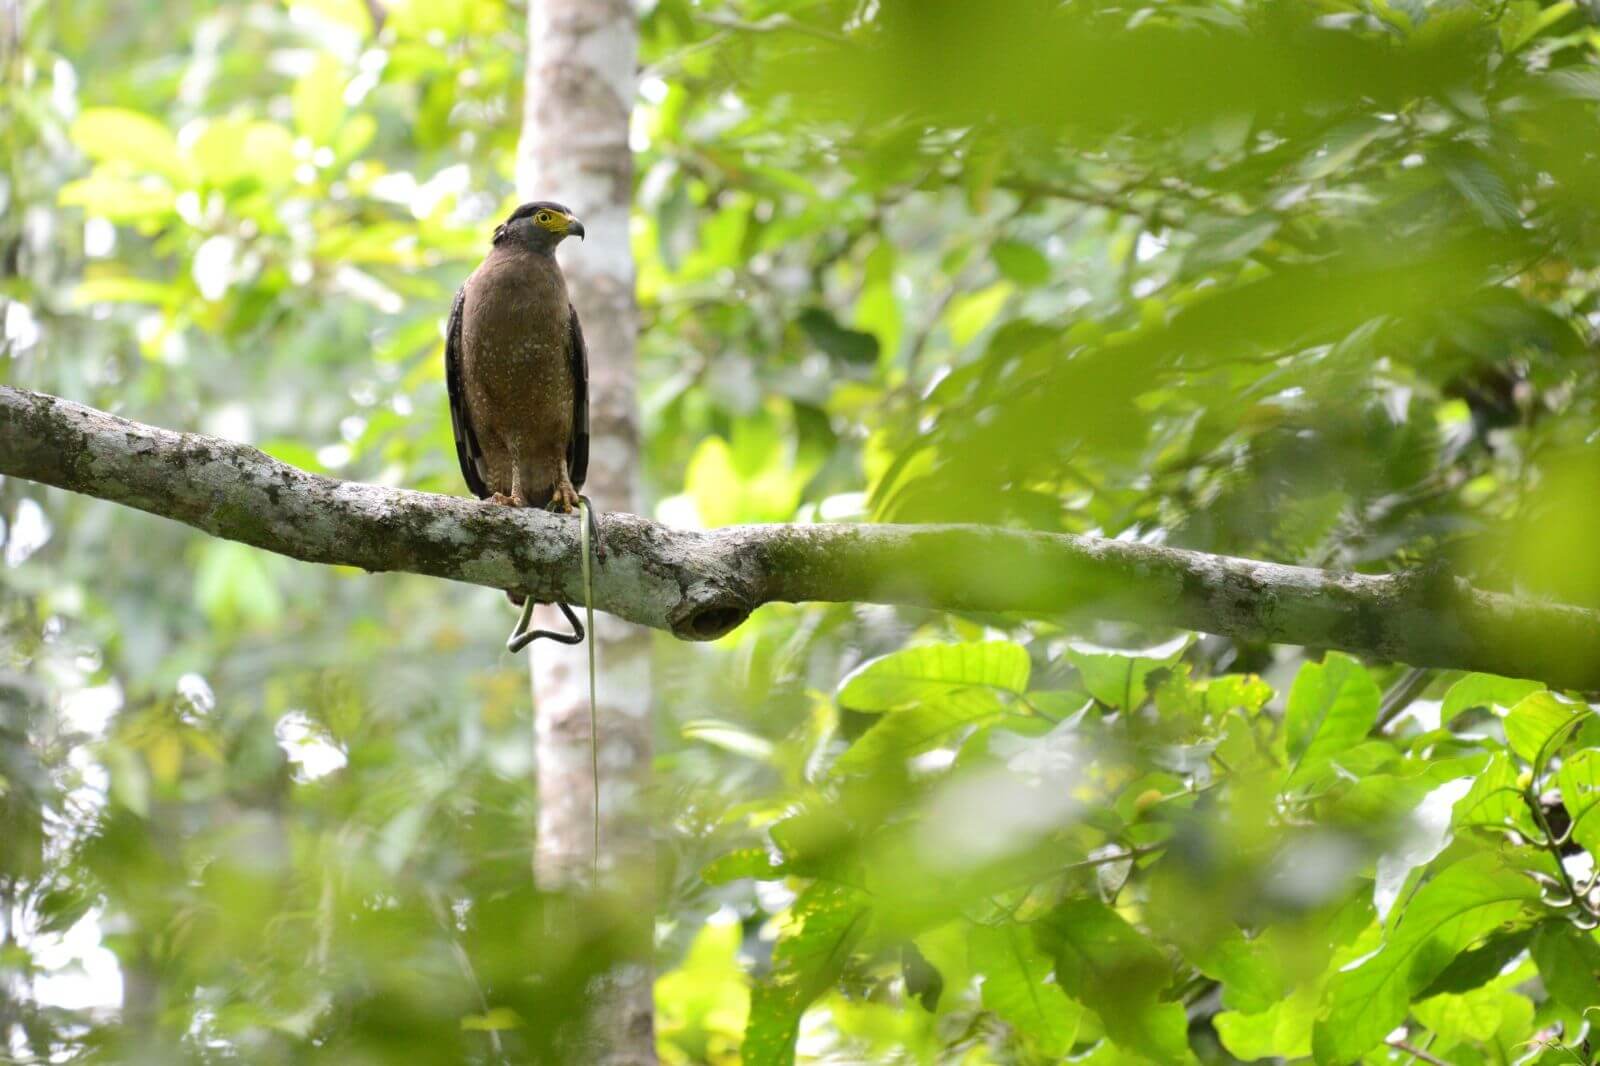 Borneo Rainforest Lodge - Eagle Crested Serpent - 